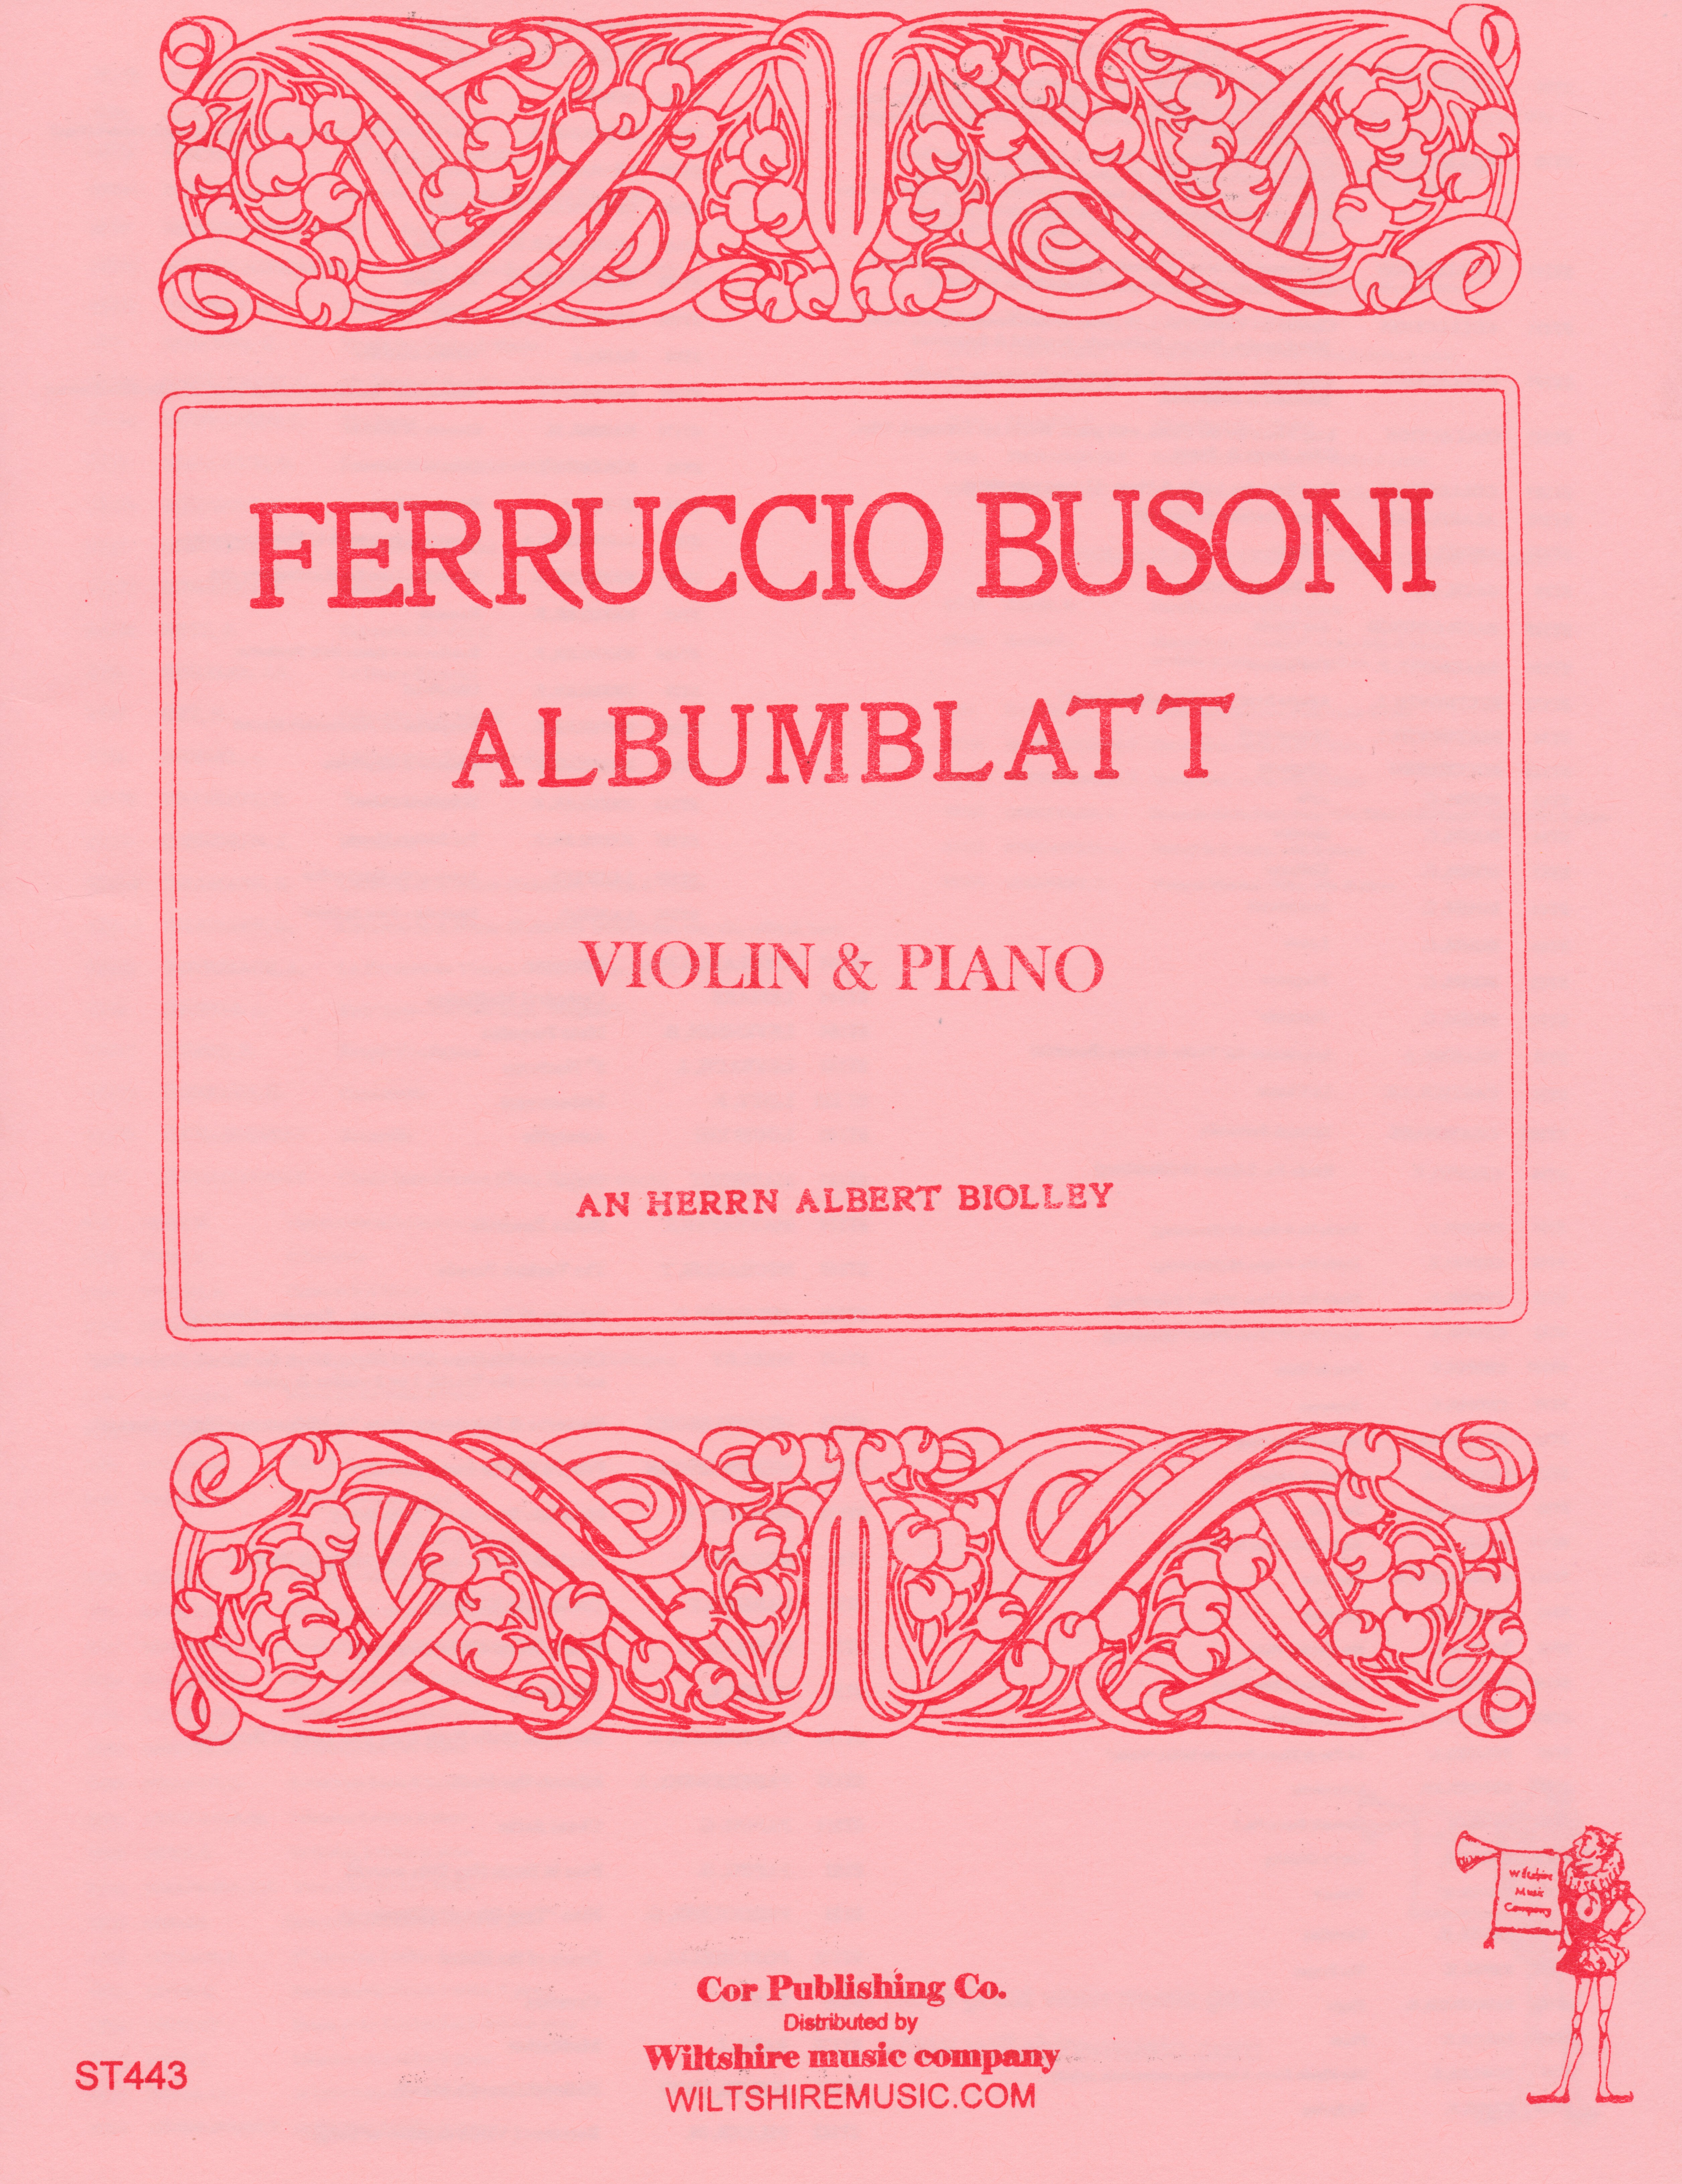 Albumblatt, Ferruccio Busoni, violin & piano